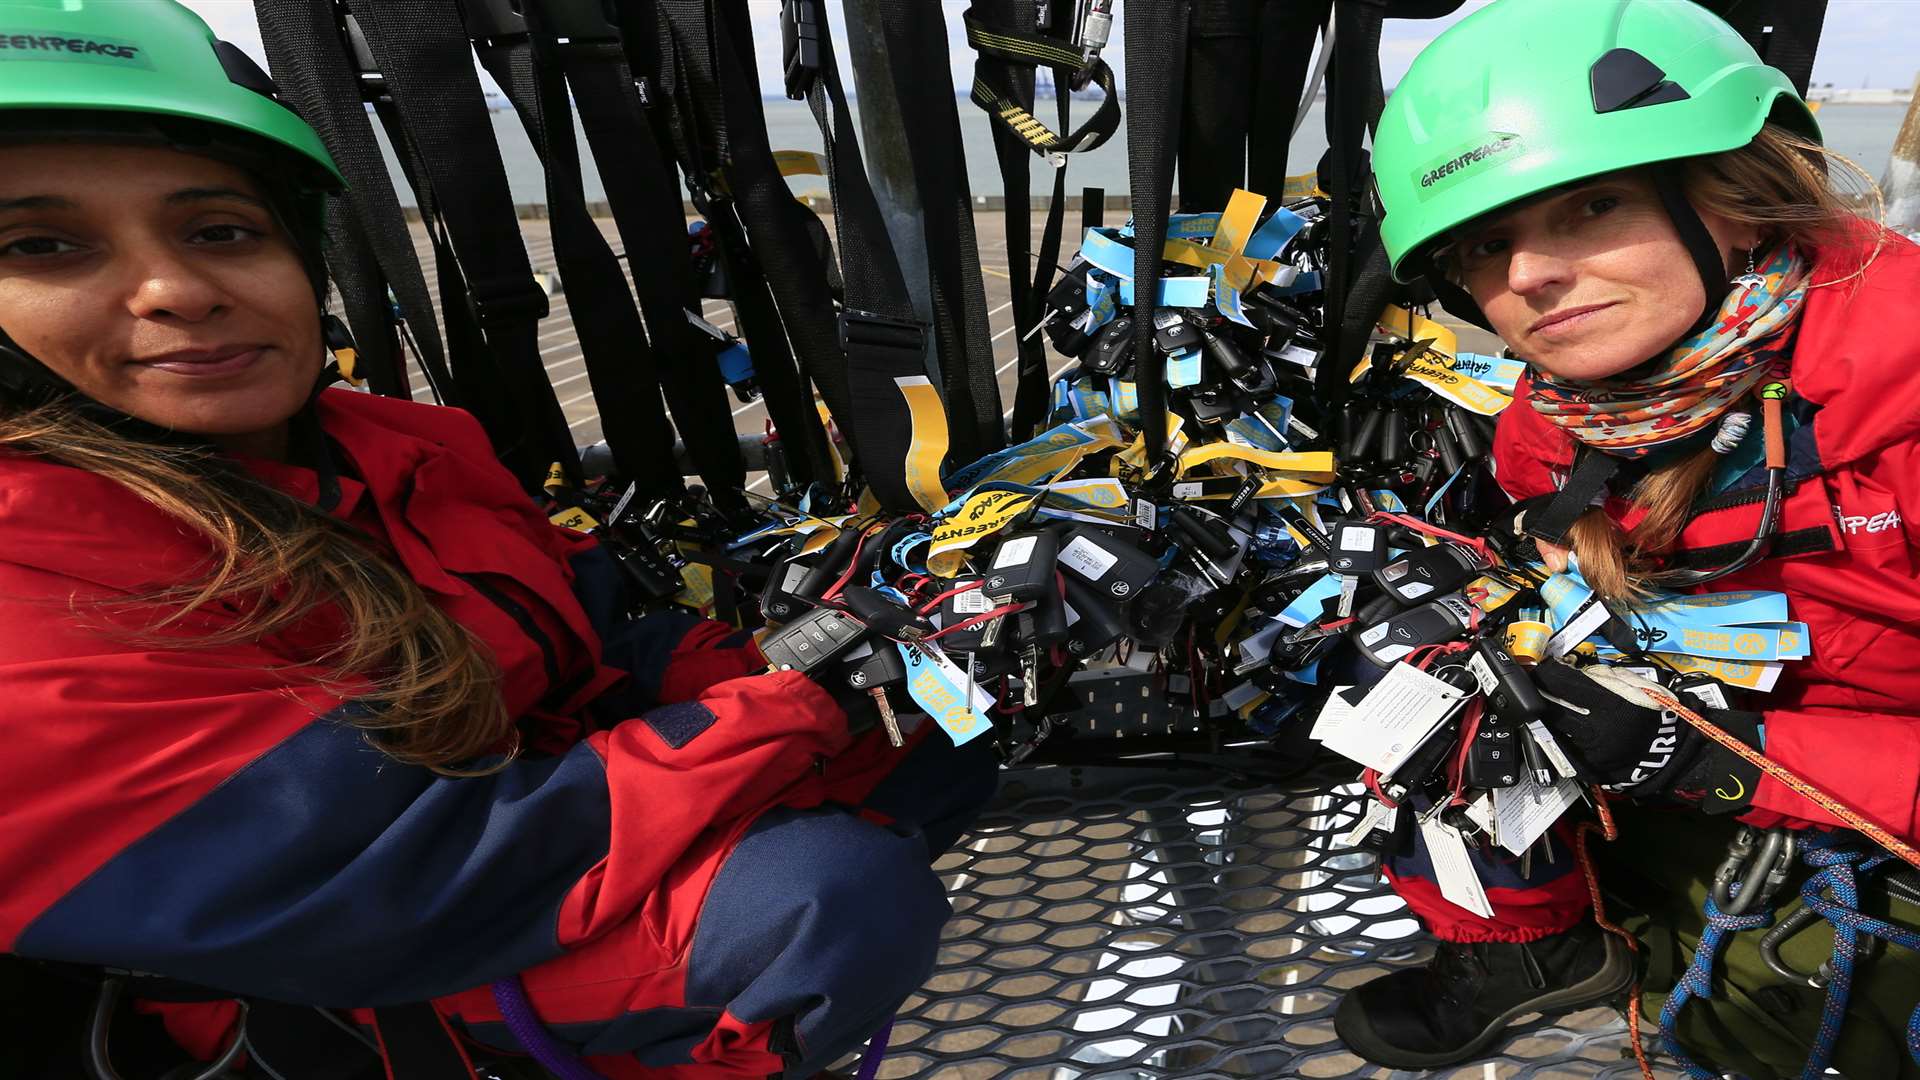 Campaigners seized thousands of car keys. Picture: Jiri Rezac/Greenpeace